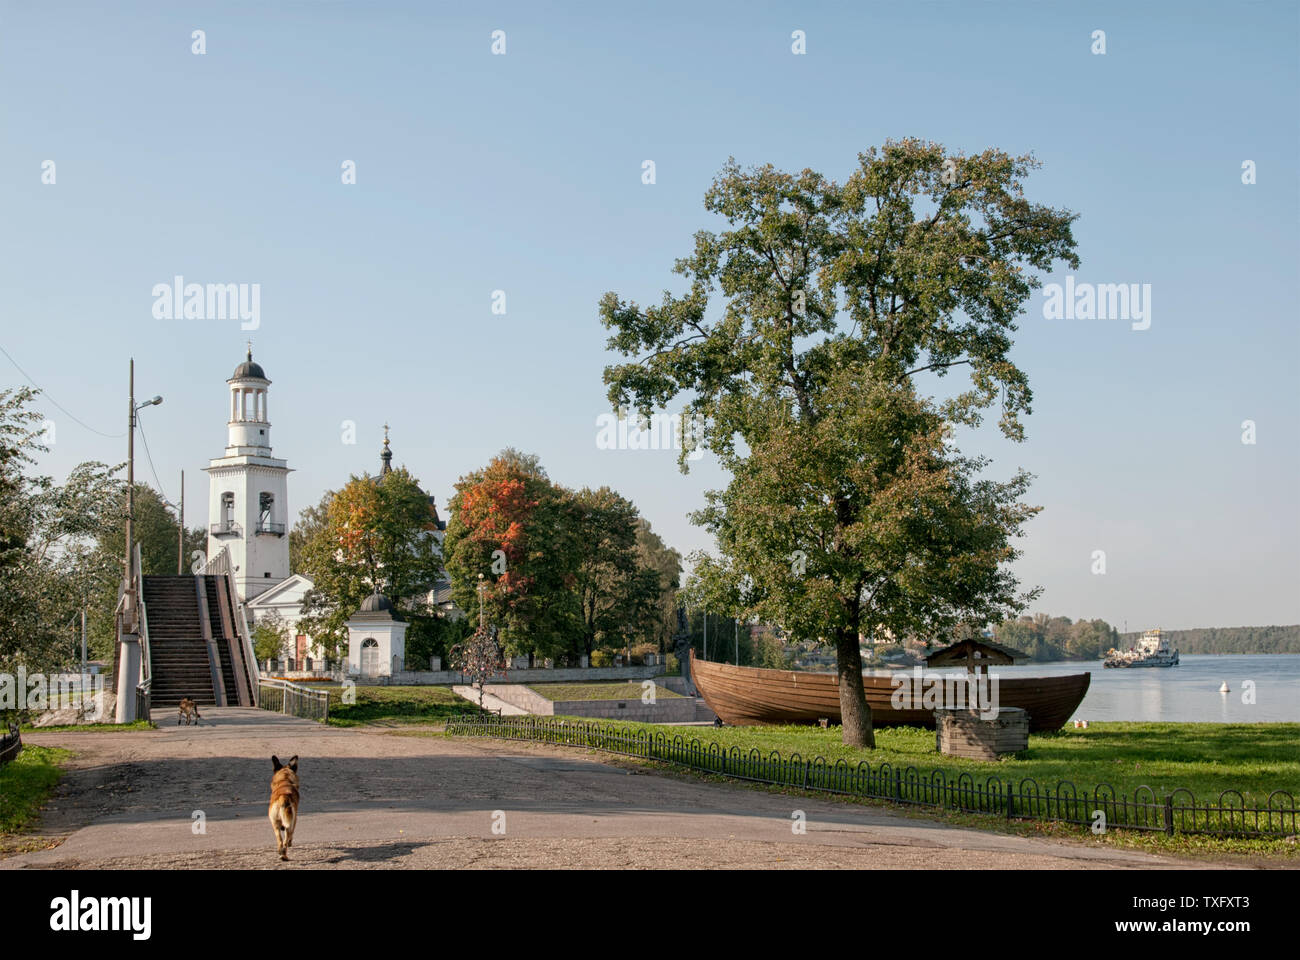 UST-IZHORA, SAINT-PETERSBURG, RUSSIA – SEPTEMBER 19, 2018: Boat Slawiya near The Diorama Museum and Alexander Nevsky Church next to The Neva River Stock Photo